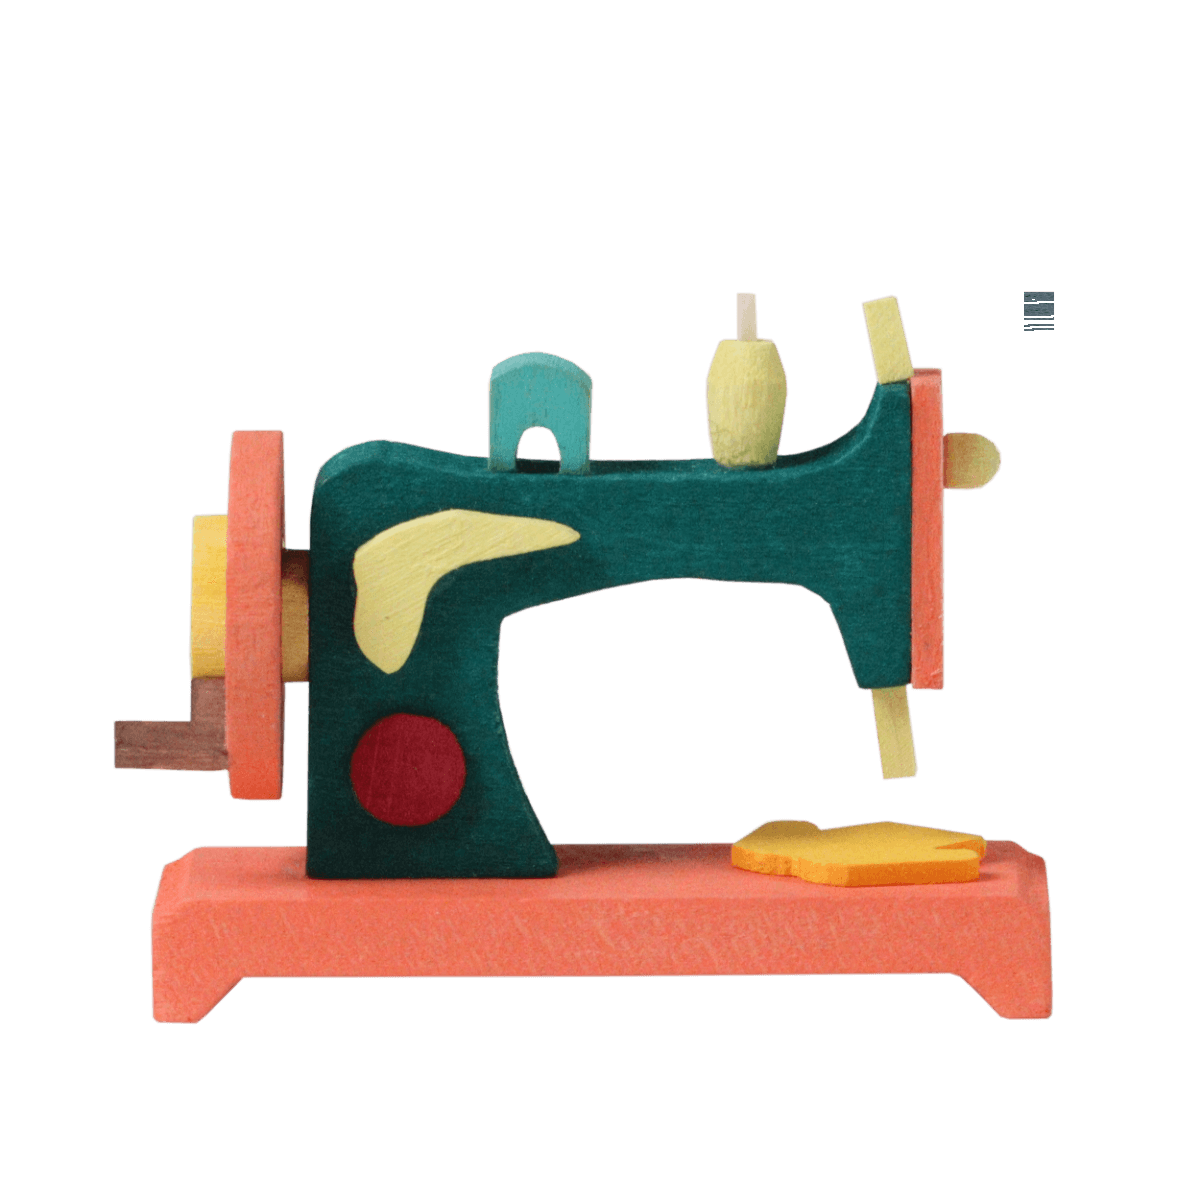 Sewing Machine Ornament by Graupner Holzminiaturen